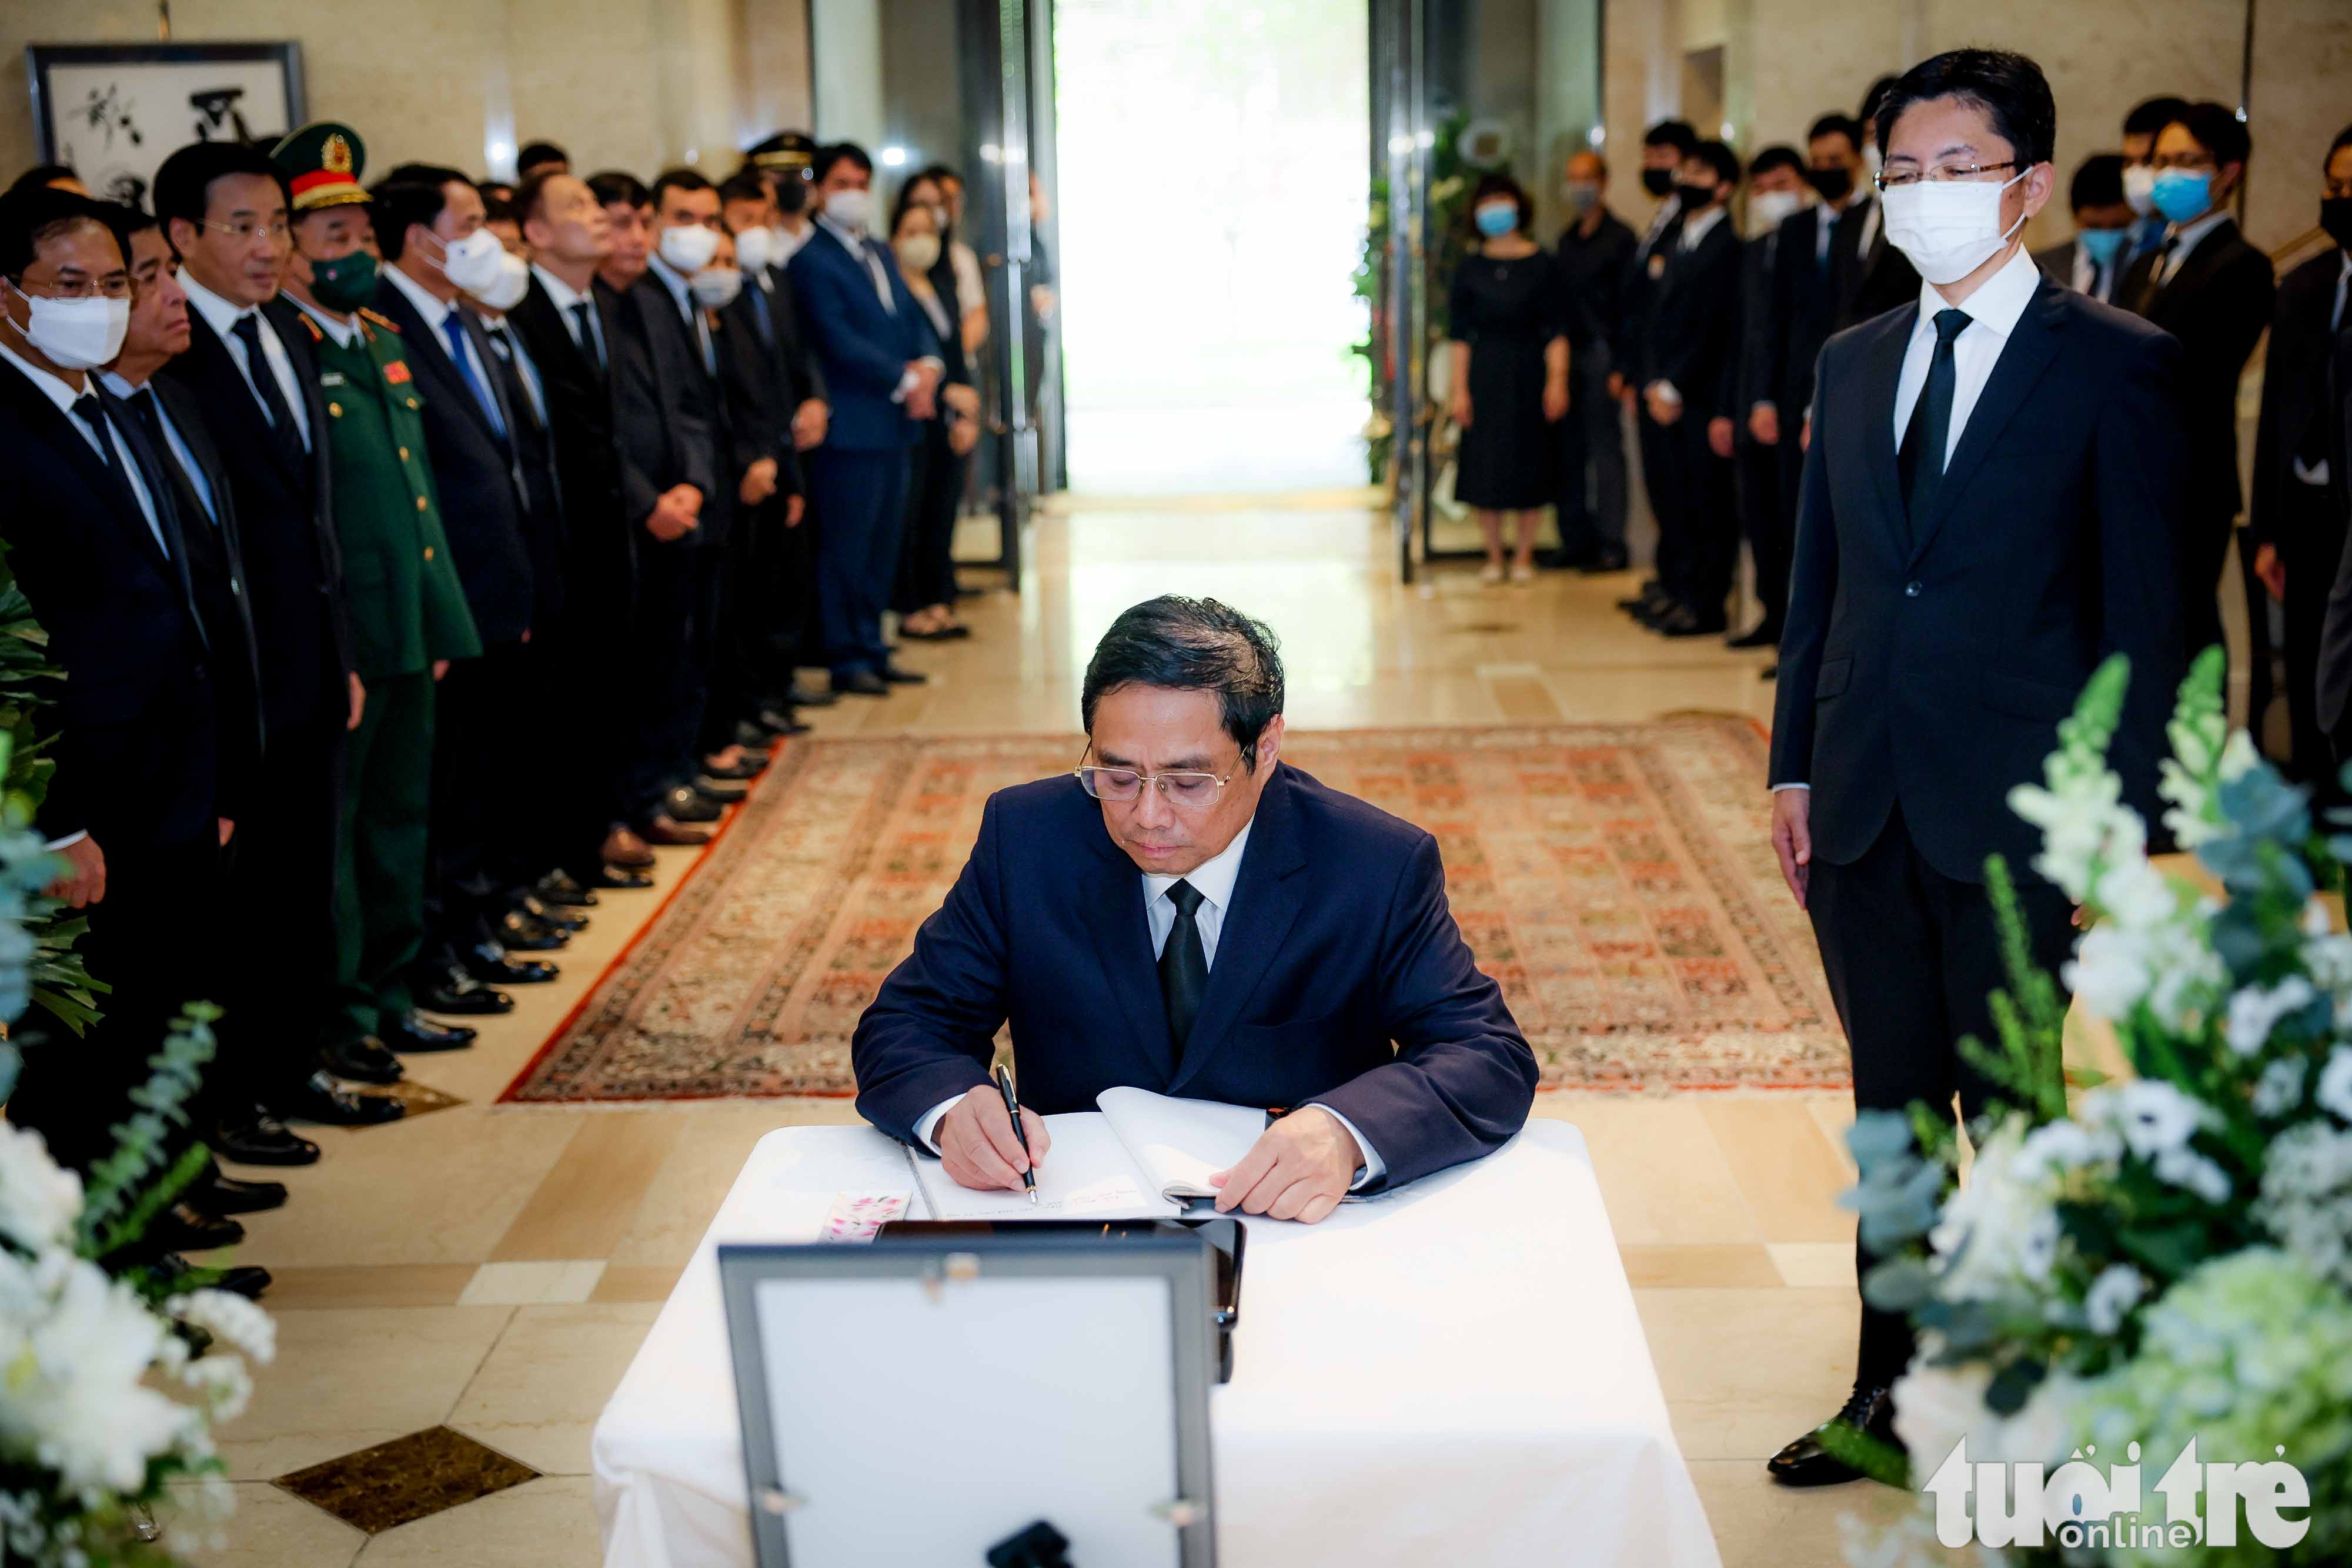 Vietnamese premier writes in condolence book for former Japanese Prime Minister Shinzo Abe